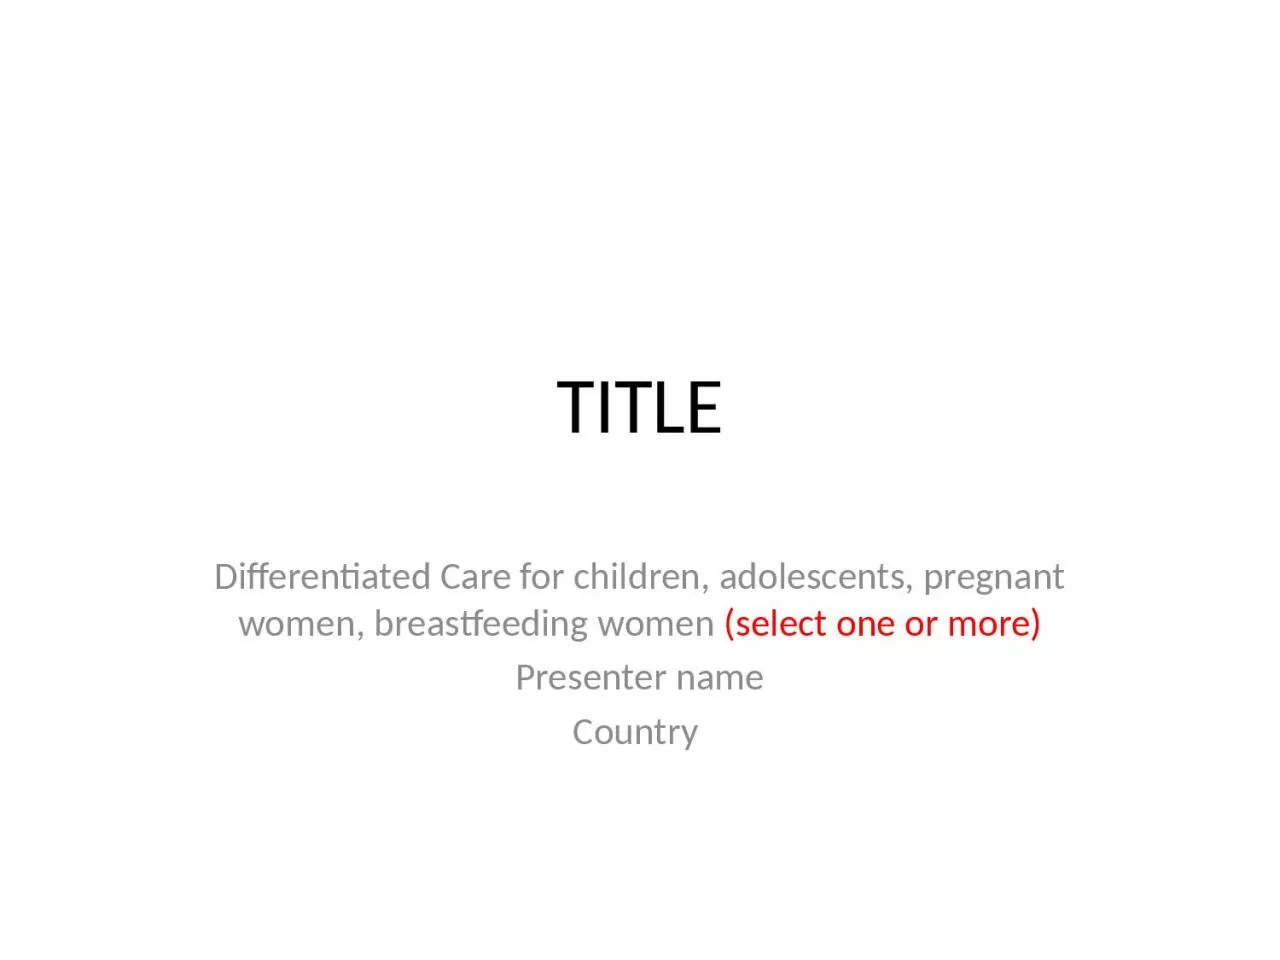 TITLE Differentiated Care for children, adolescents, pregnant women, breastfeeding women